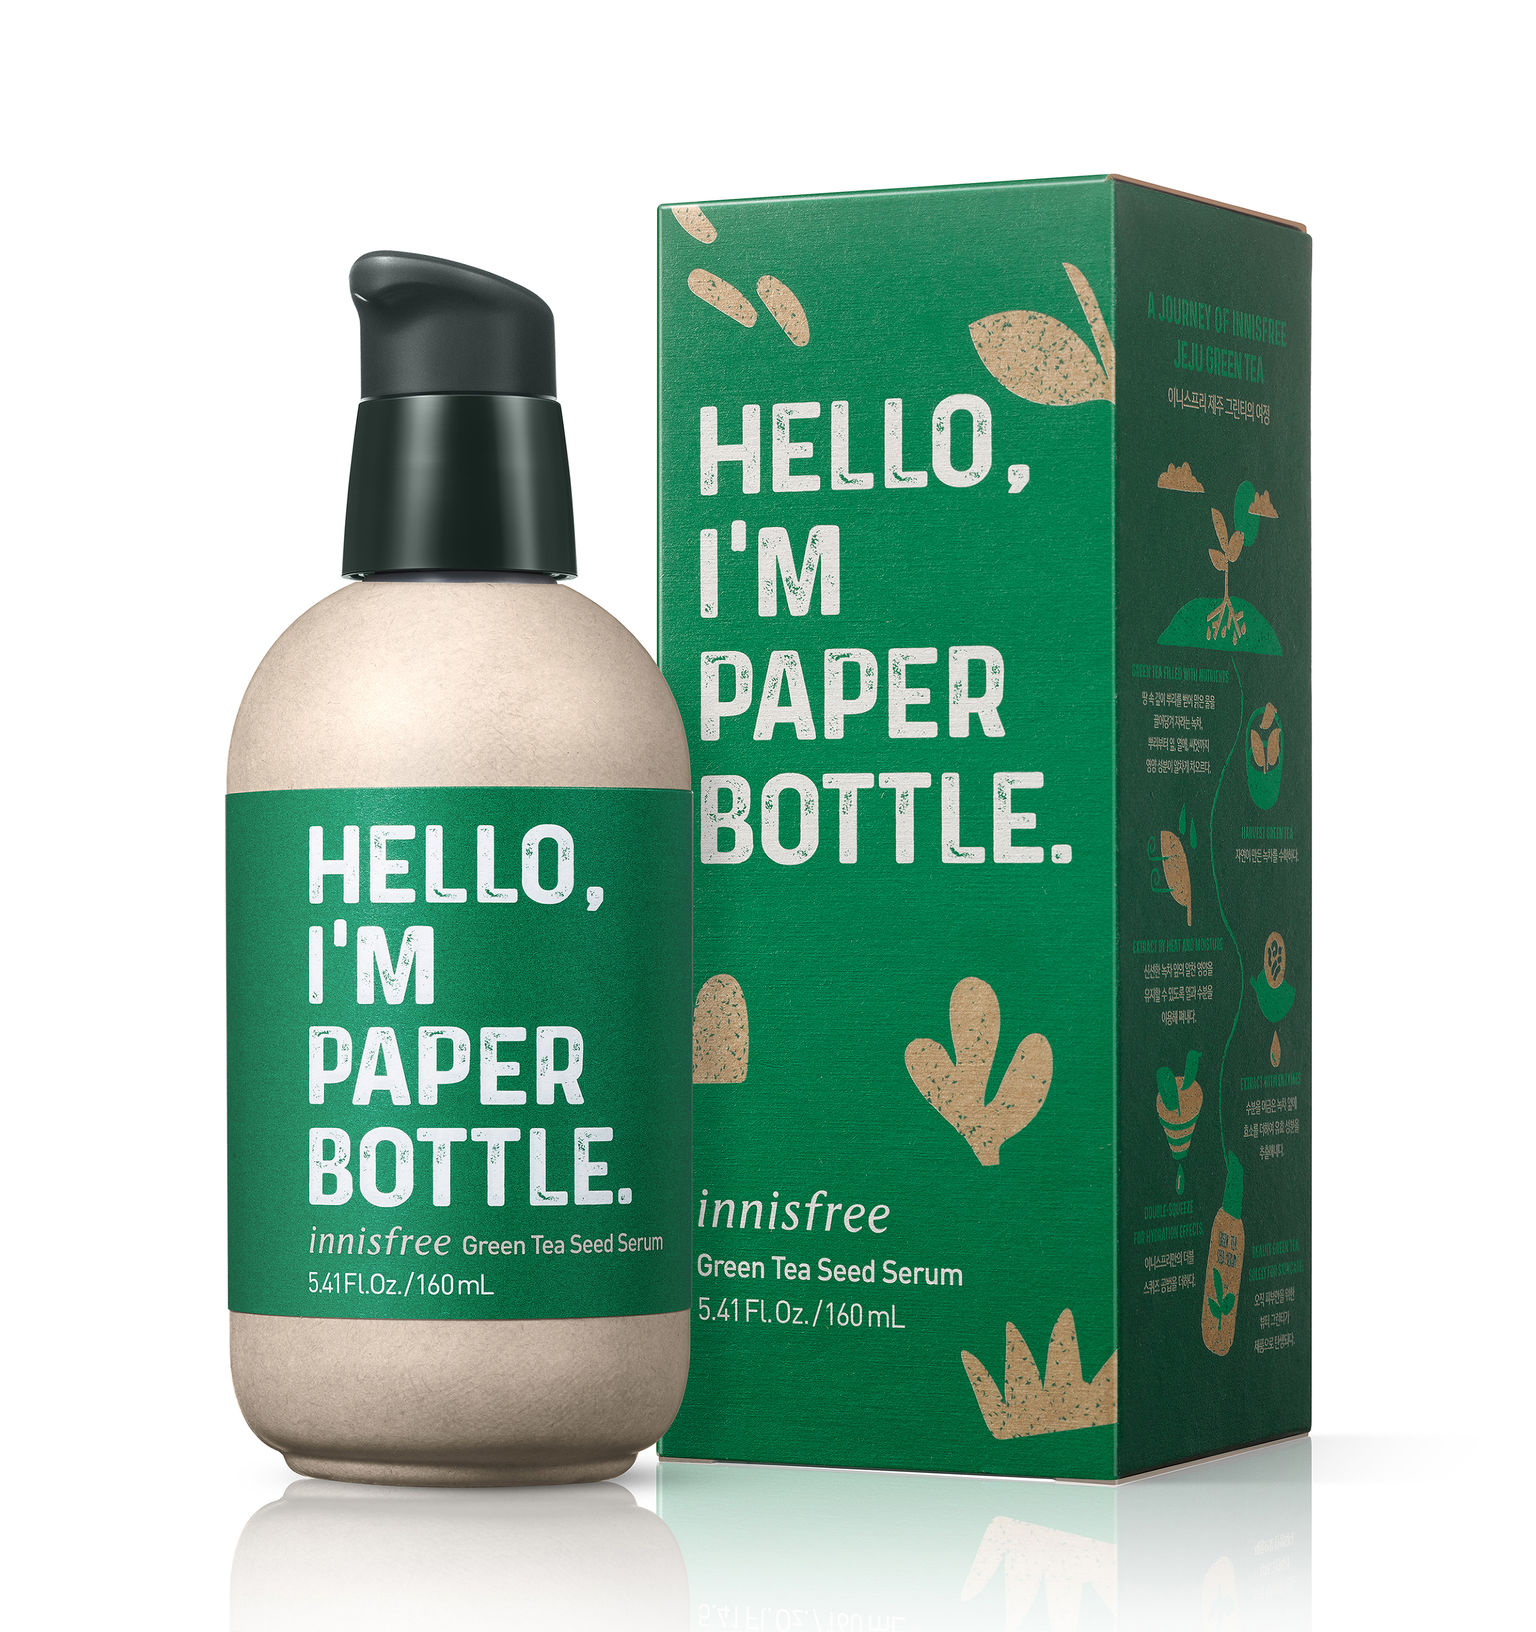 Innisfree's Green Tea Seed Serum Paper Bottle